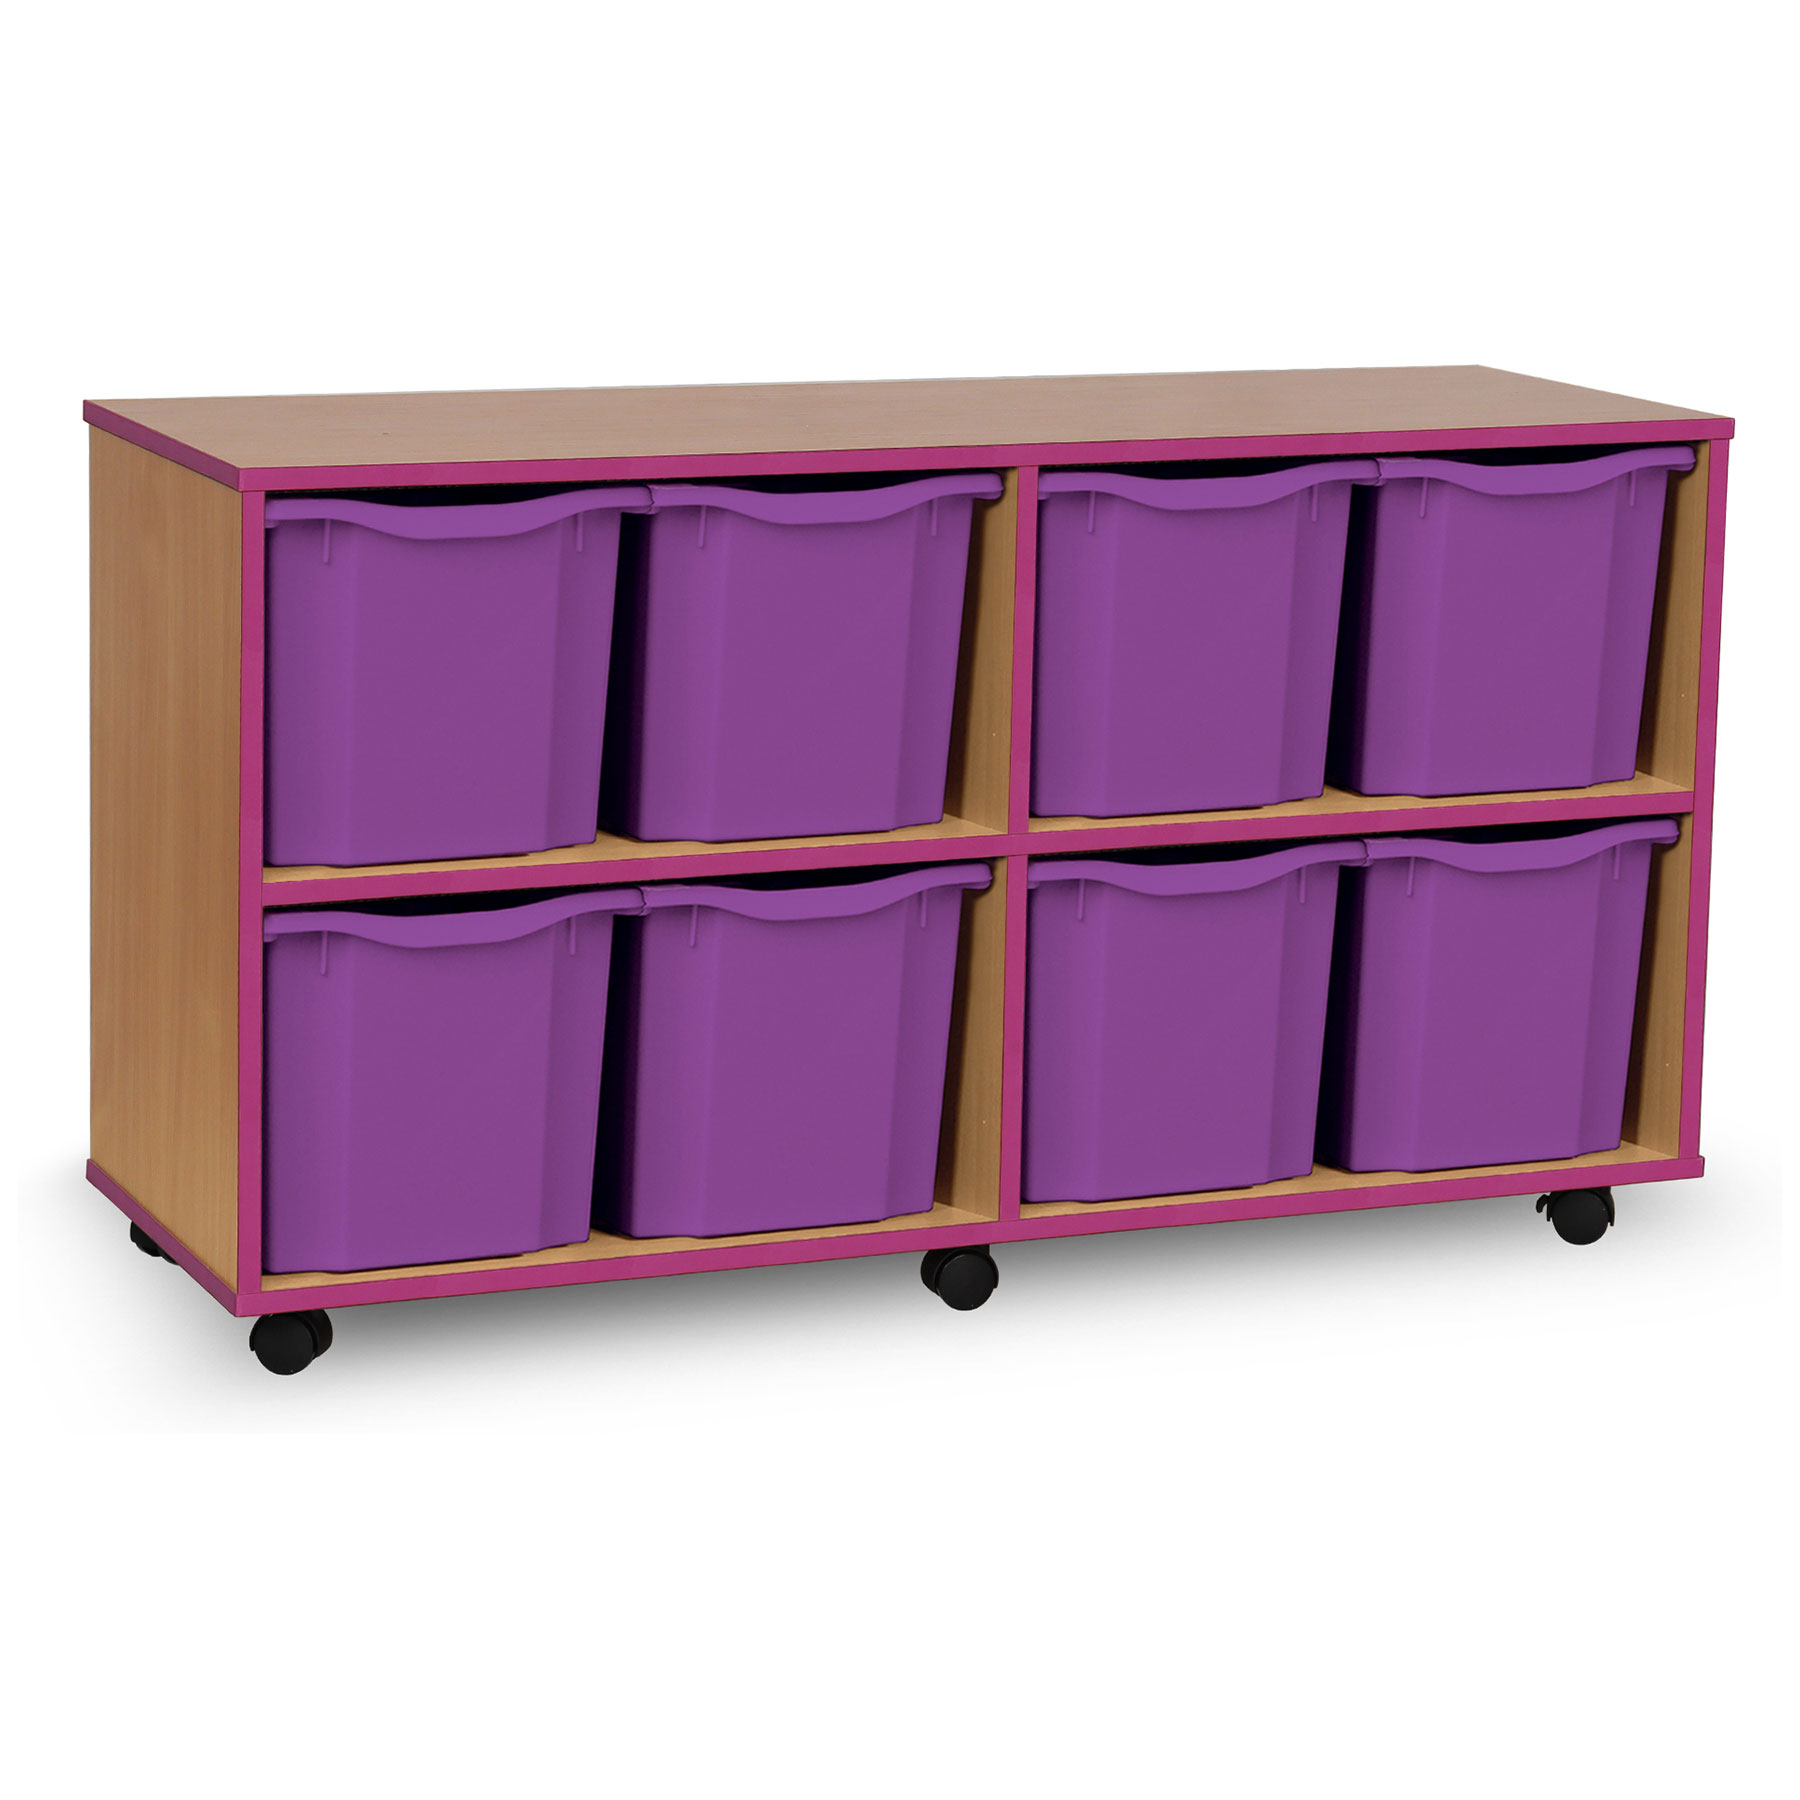 8 Quad Tray Unit with Purple Edging, Castors & Purple Trays